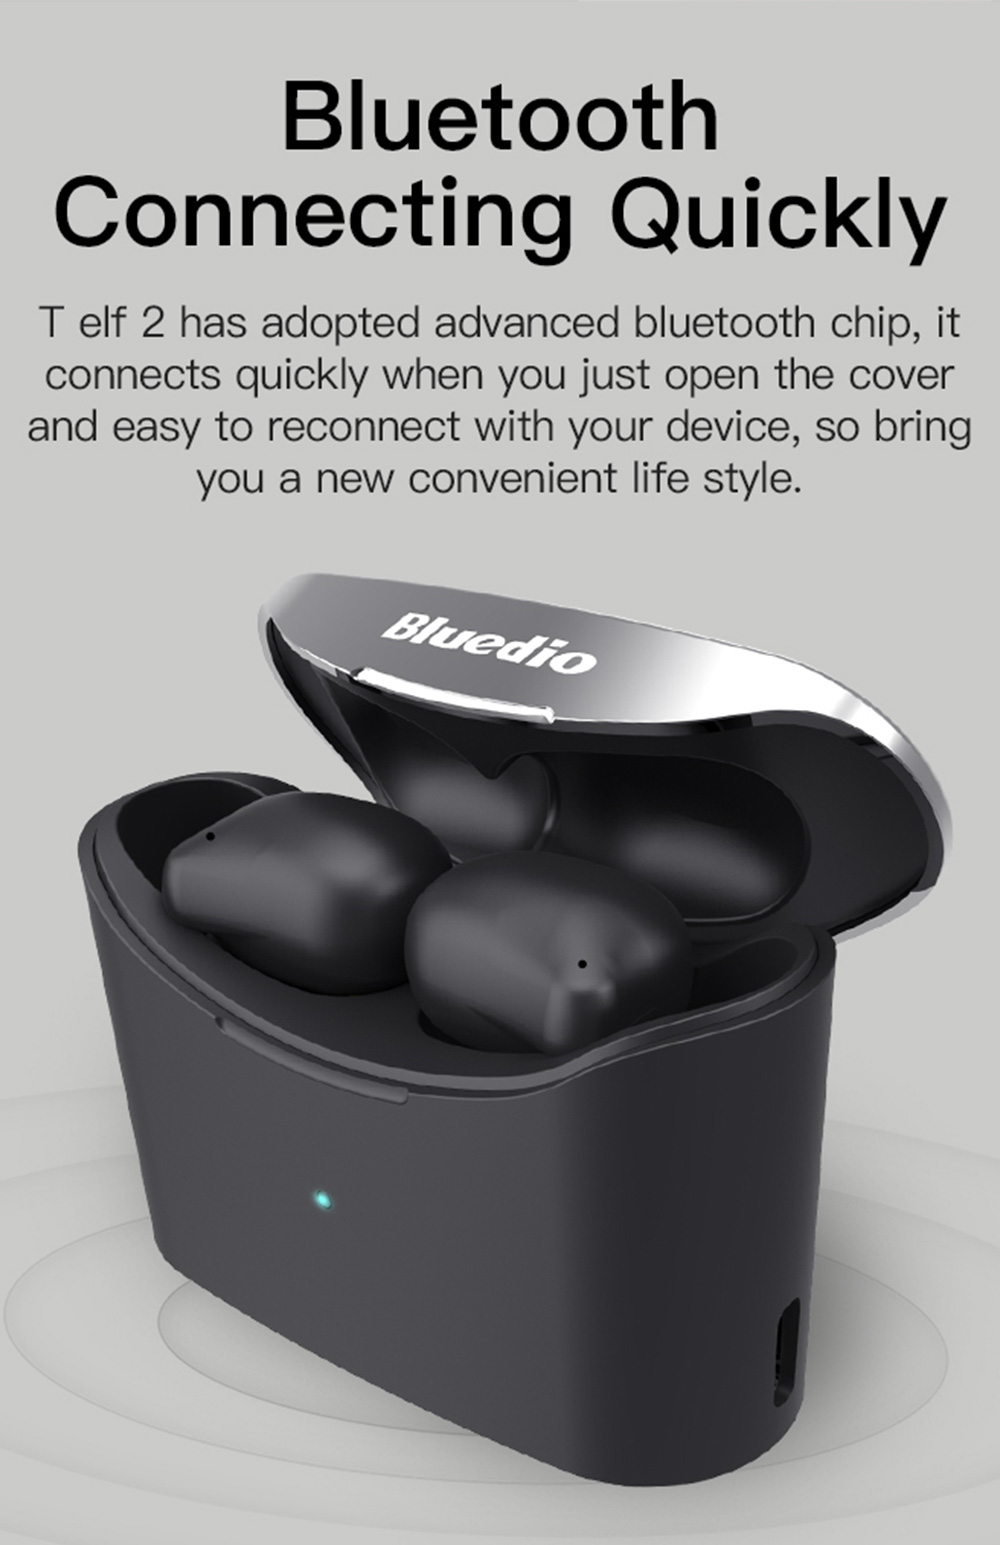 Bluedio T Elf 2 Bluetooth 5.0 TWS Earphones 6 Hours Playtime IPX6 Volume Touch Control Type-C Charing - Black